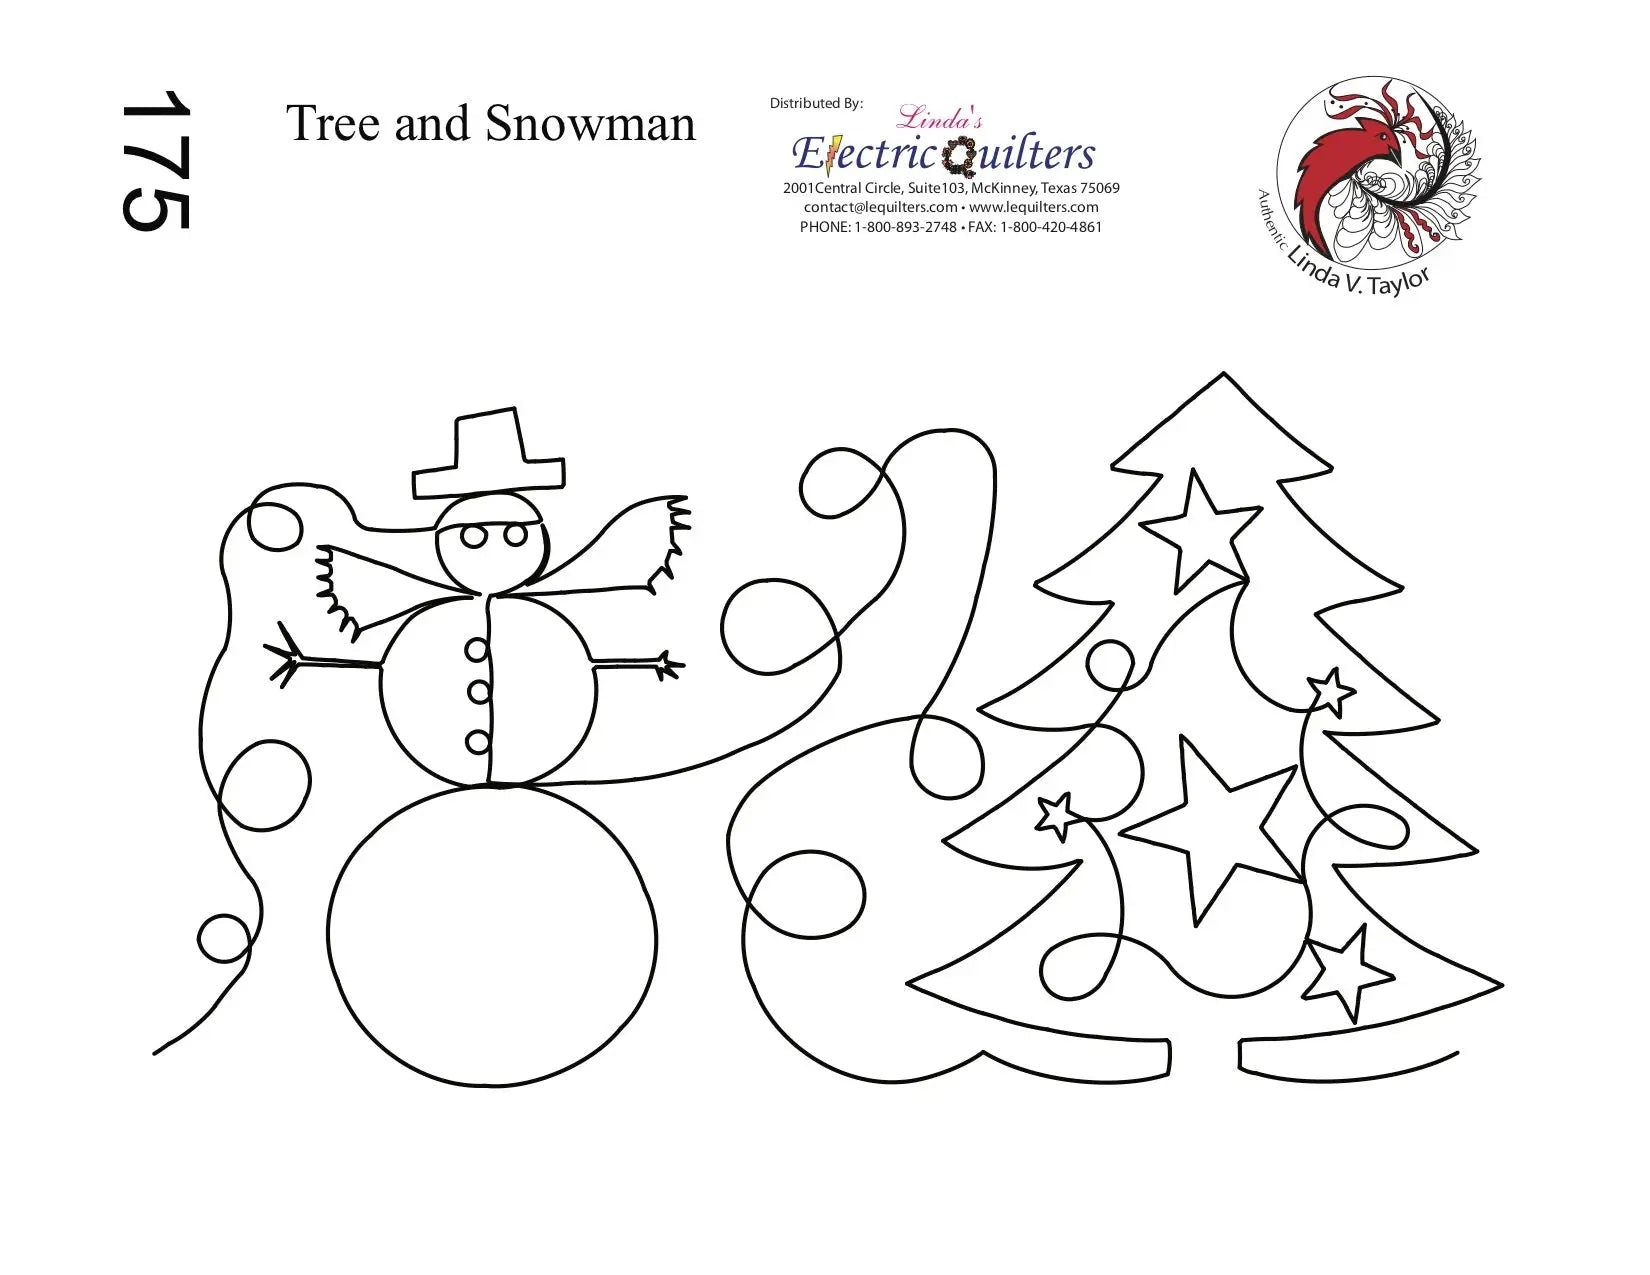 175 Trees And Snowman Pantograph by Linda V. Taylor